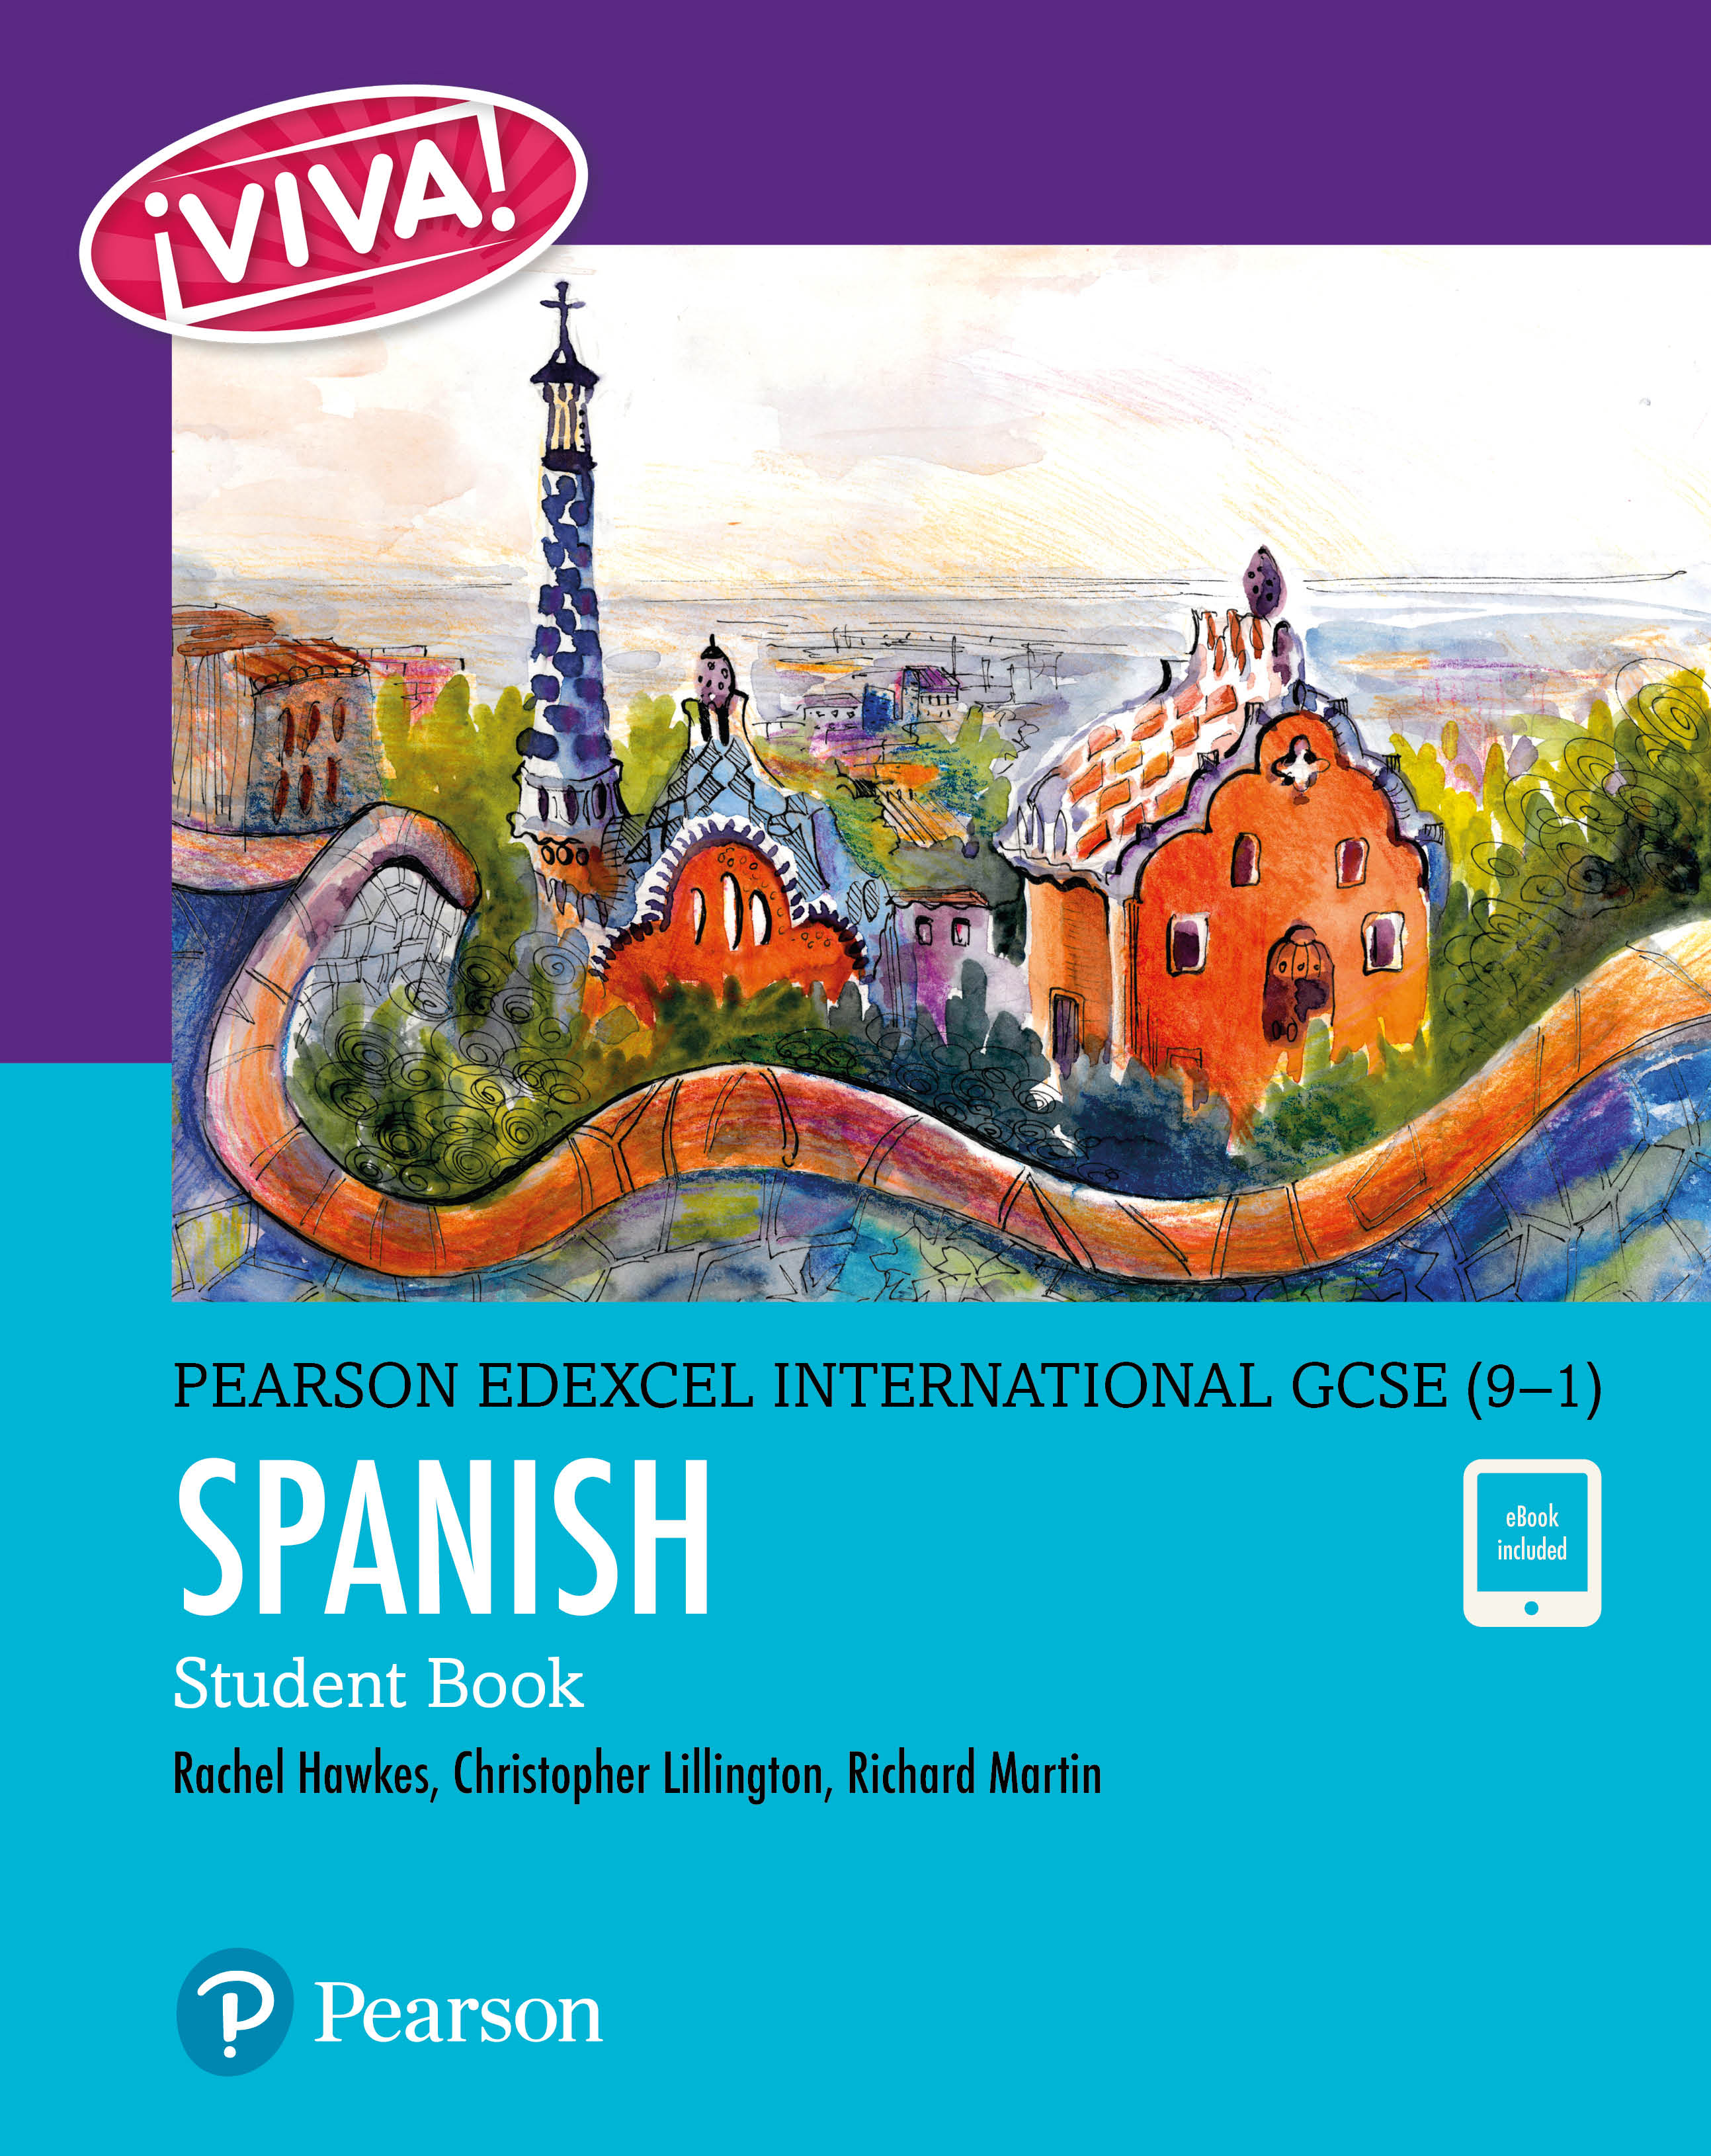 Spanish Student Book sample